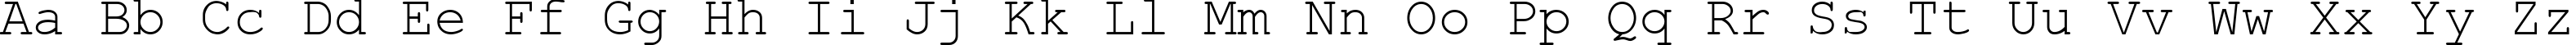 Пример написания английского алфавита шрифтом Courier Stylus